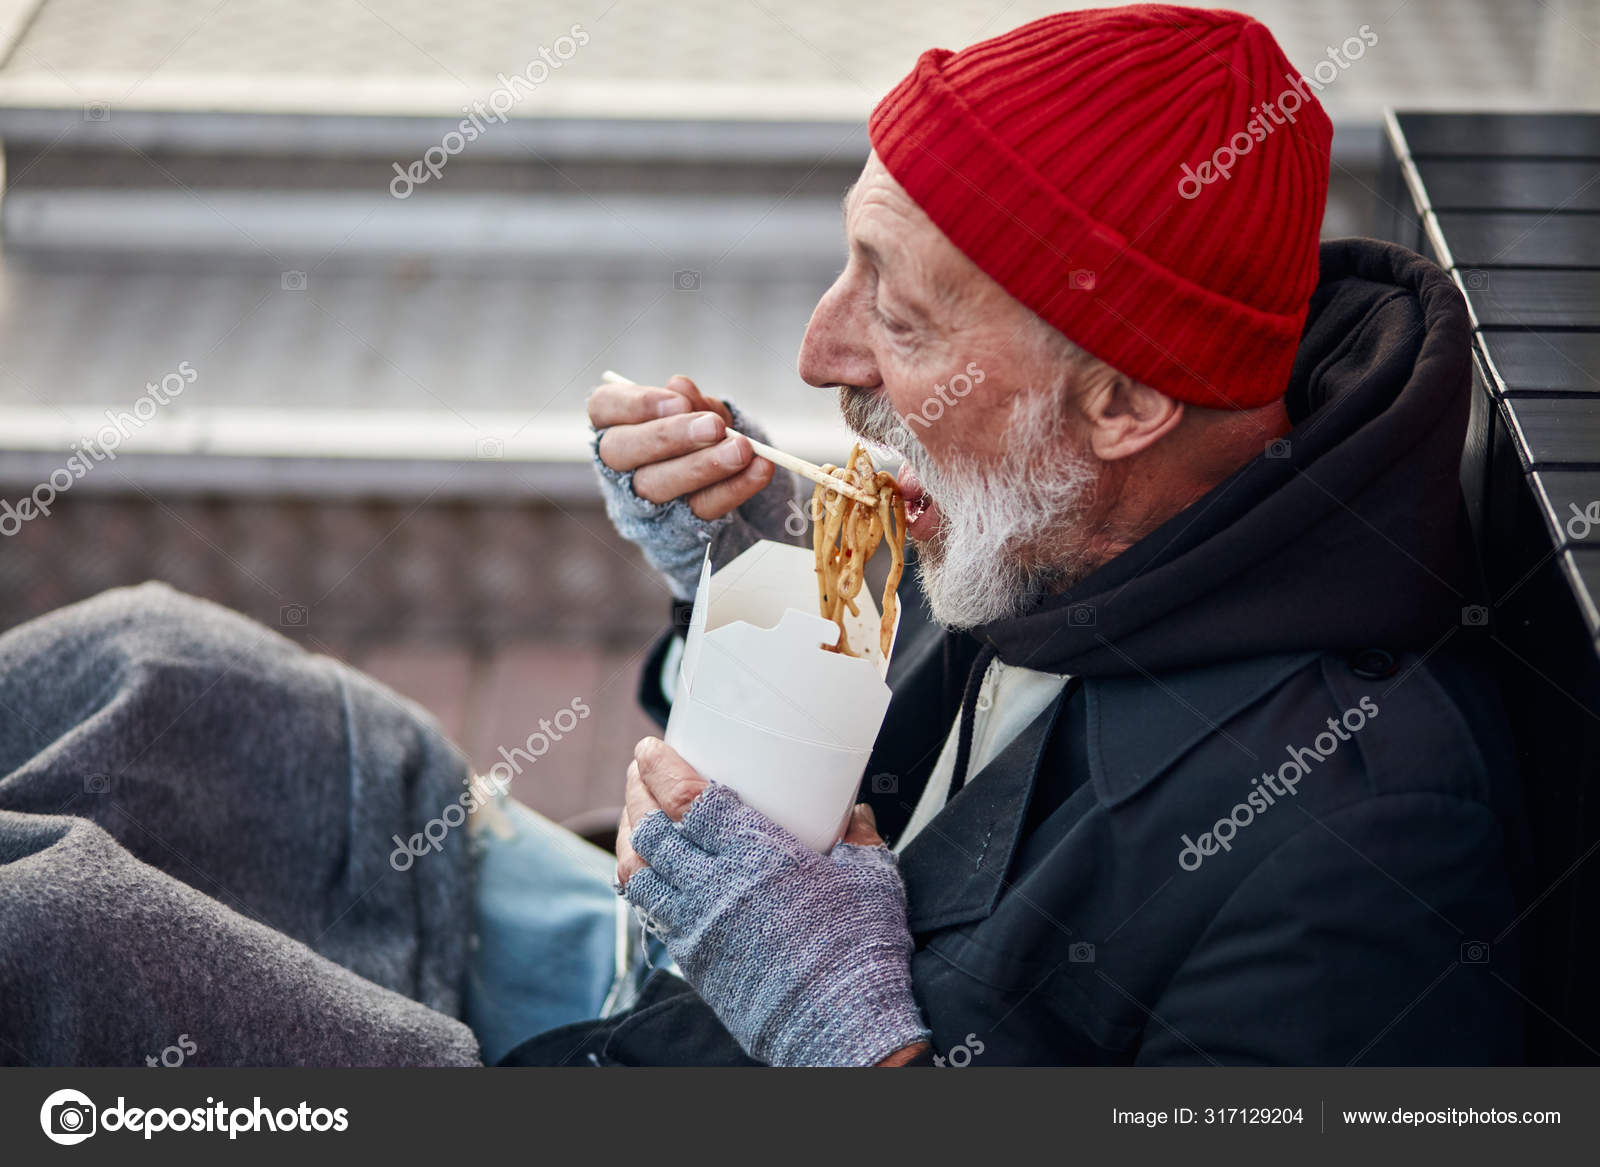 Old-aged sitting walking street and hungrily eating Stock Photo ©ufabizphoto 317129204